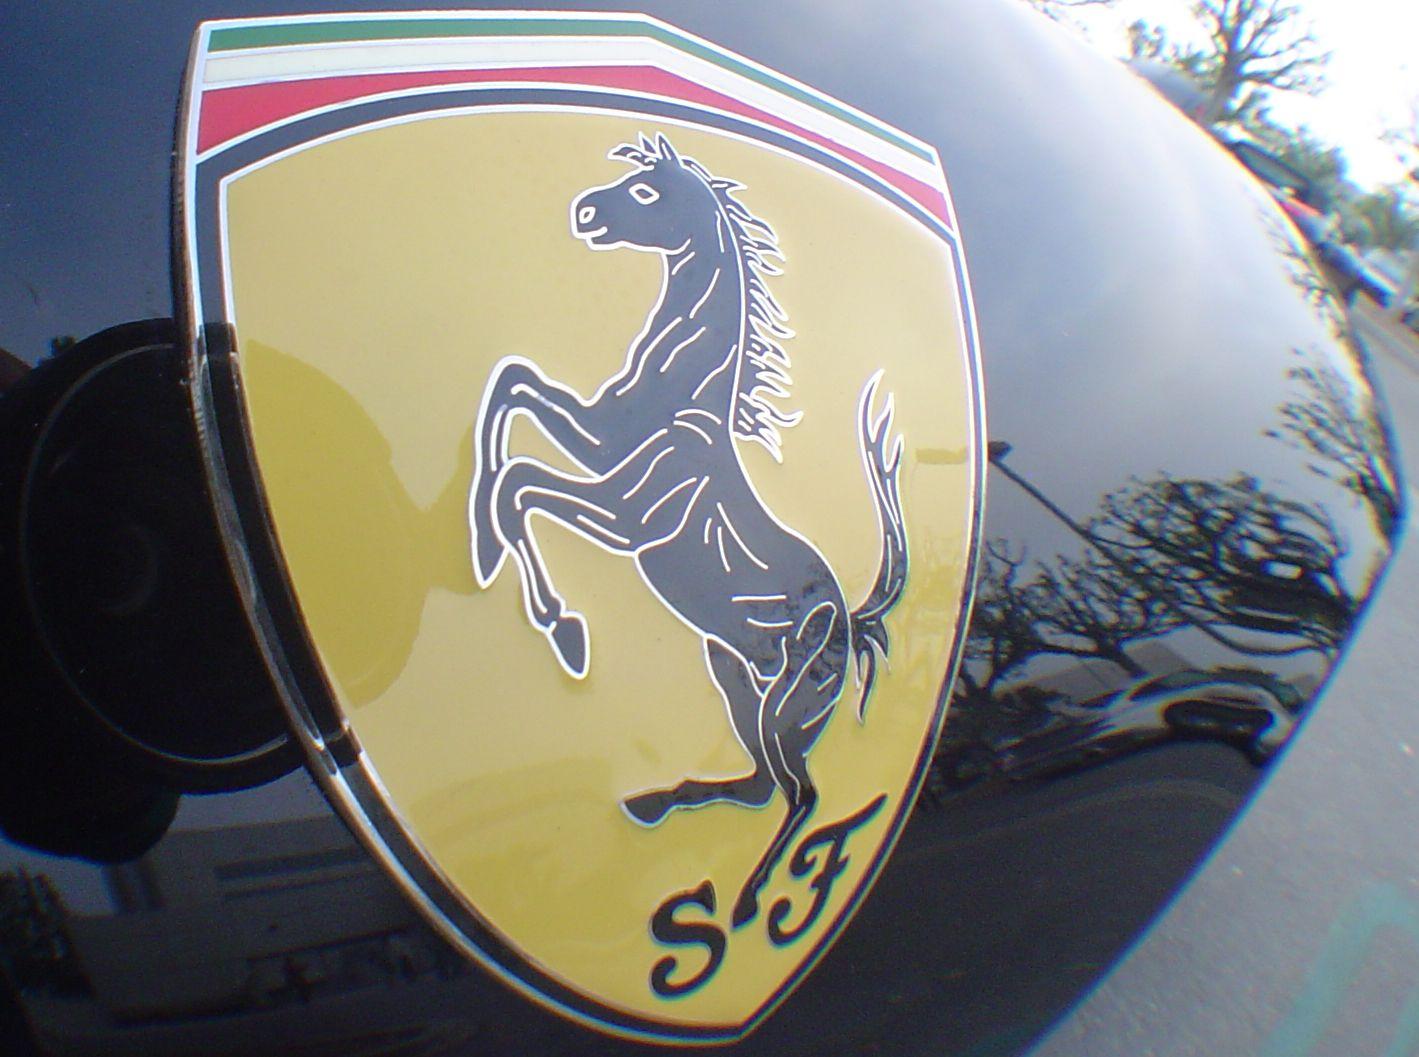 SF Horse Logo - Ferrari SF logo fisheye lens